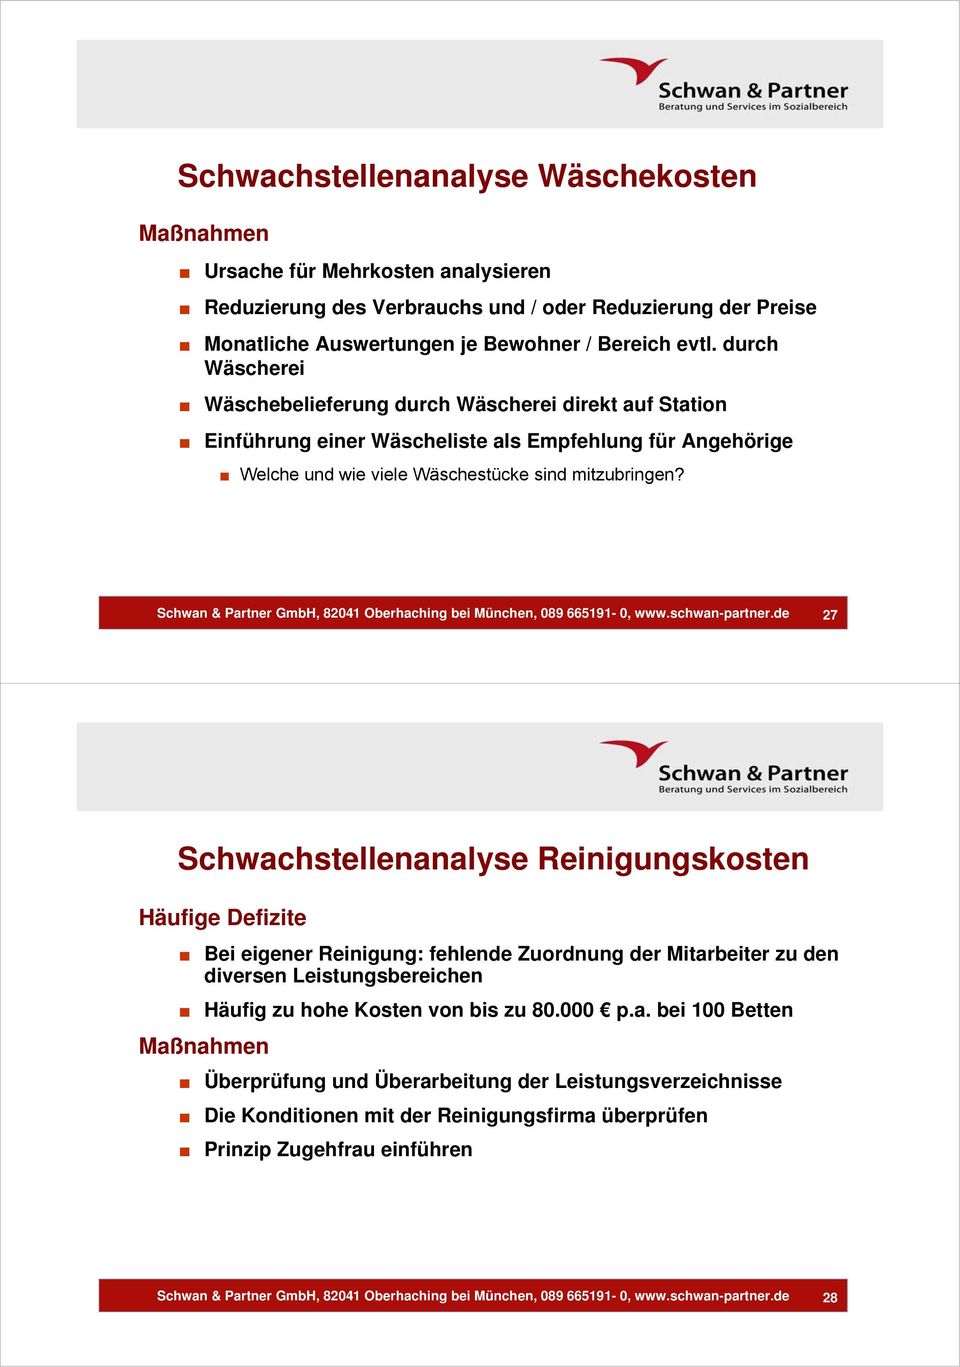 Schwan & Partner GmbH, 82041 Oberhaching bei München, 089 665191-0, www.schwan-partner.